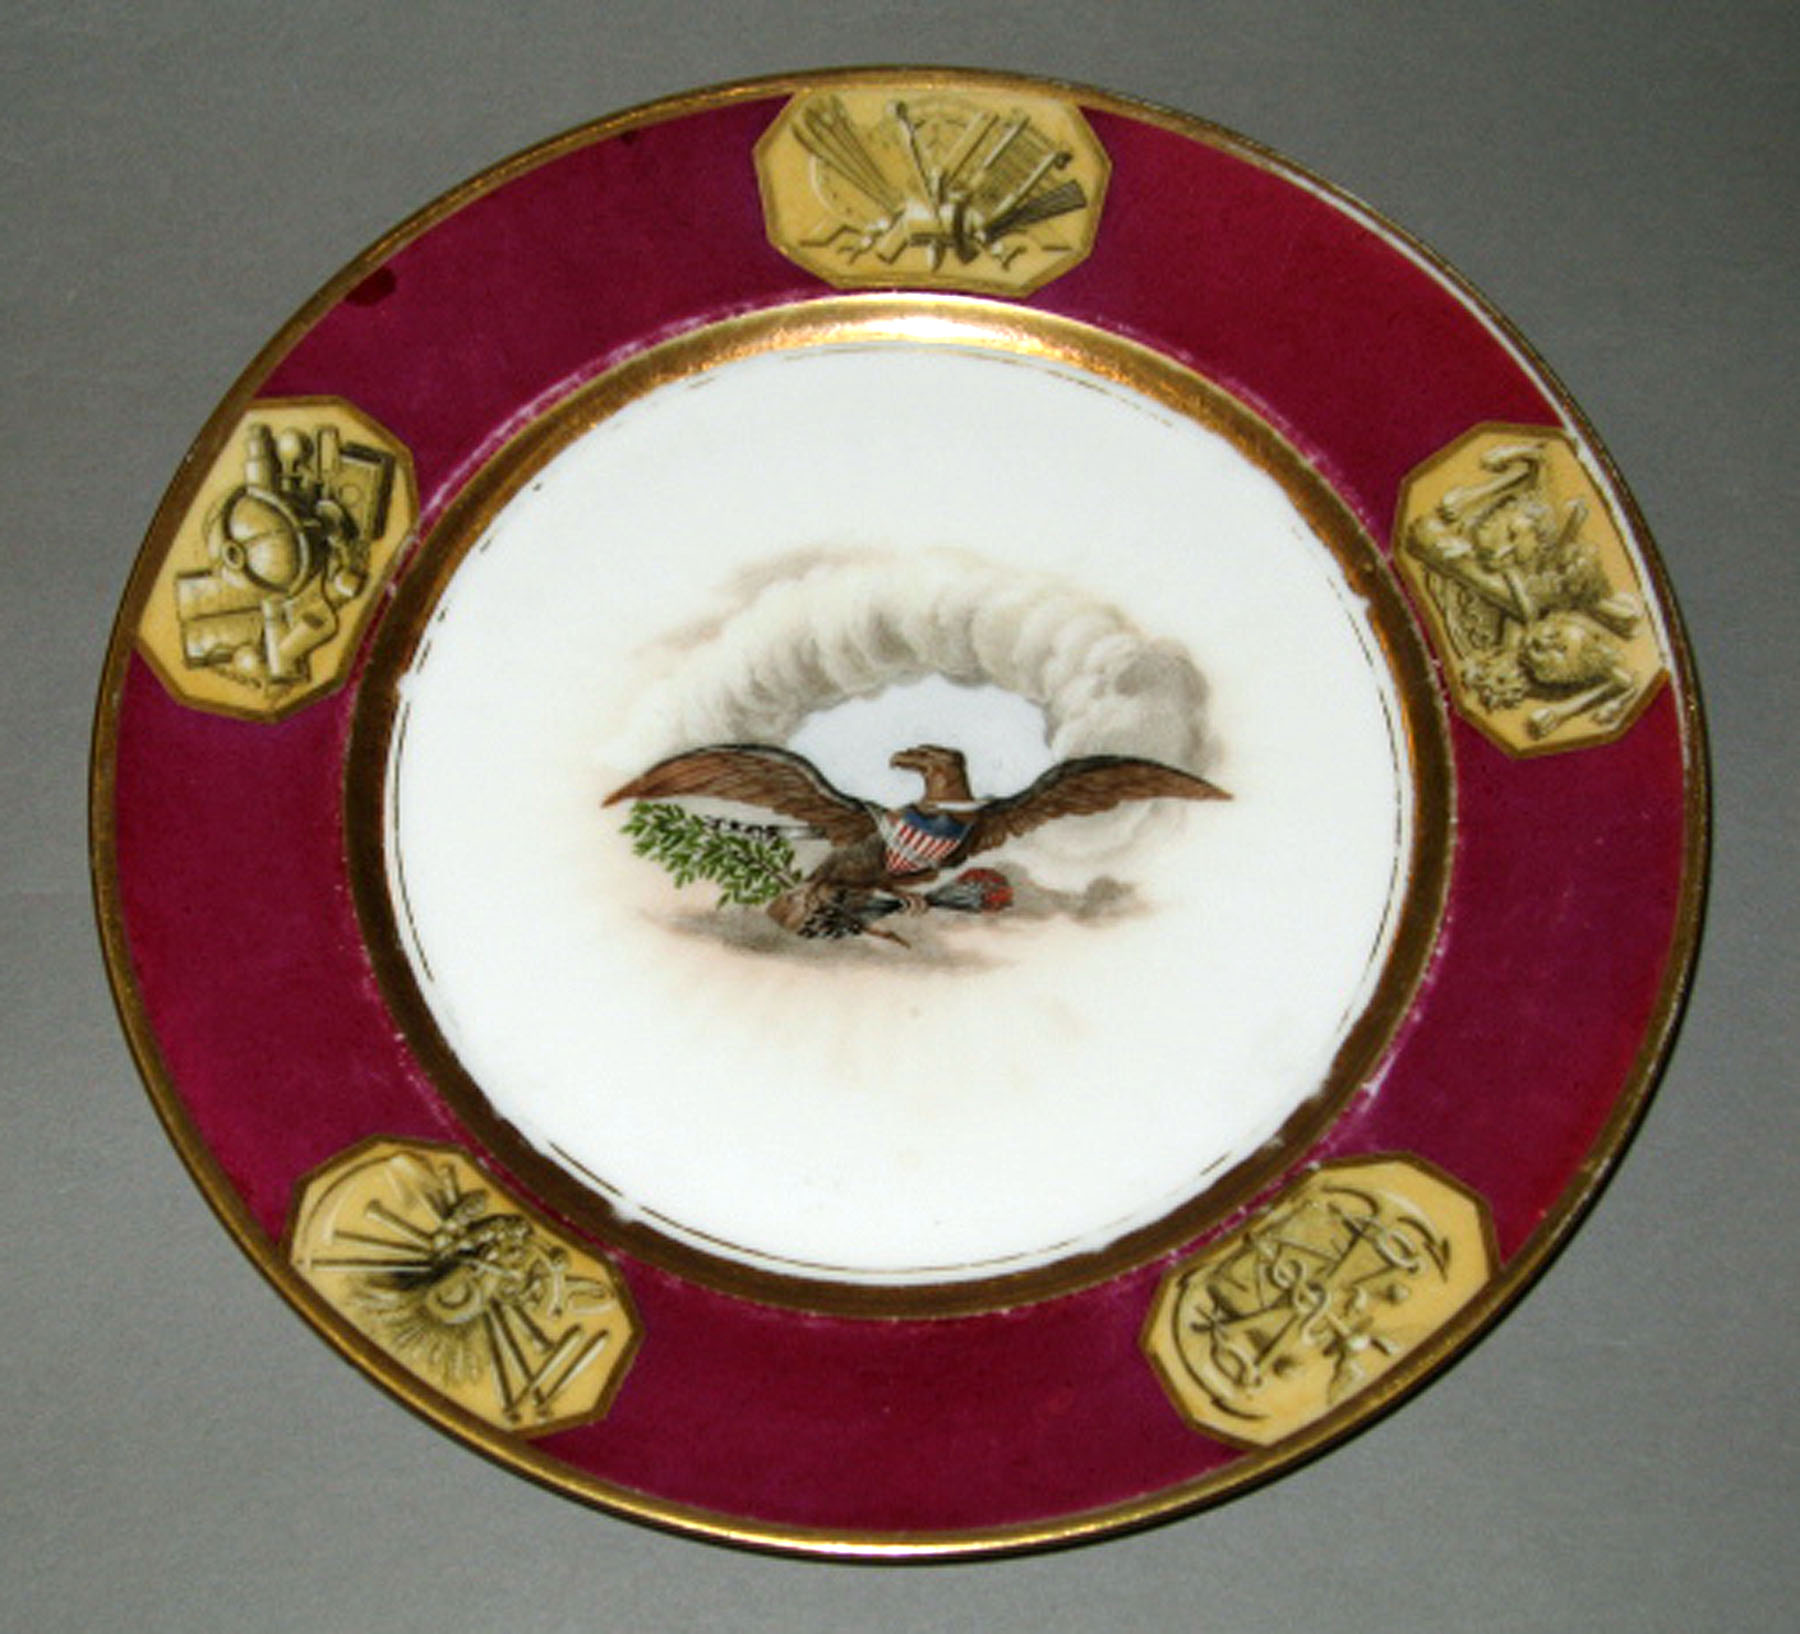 1958.1606.015 Porcelain plate